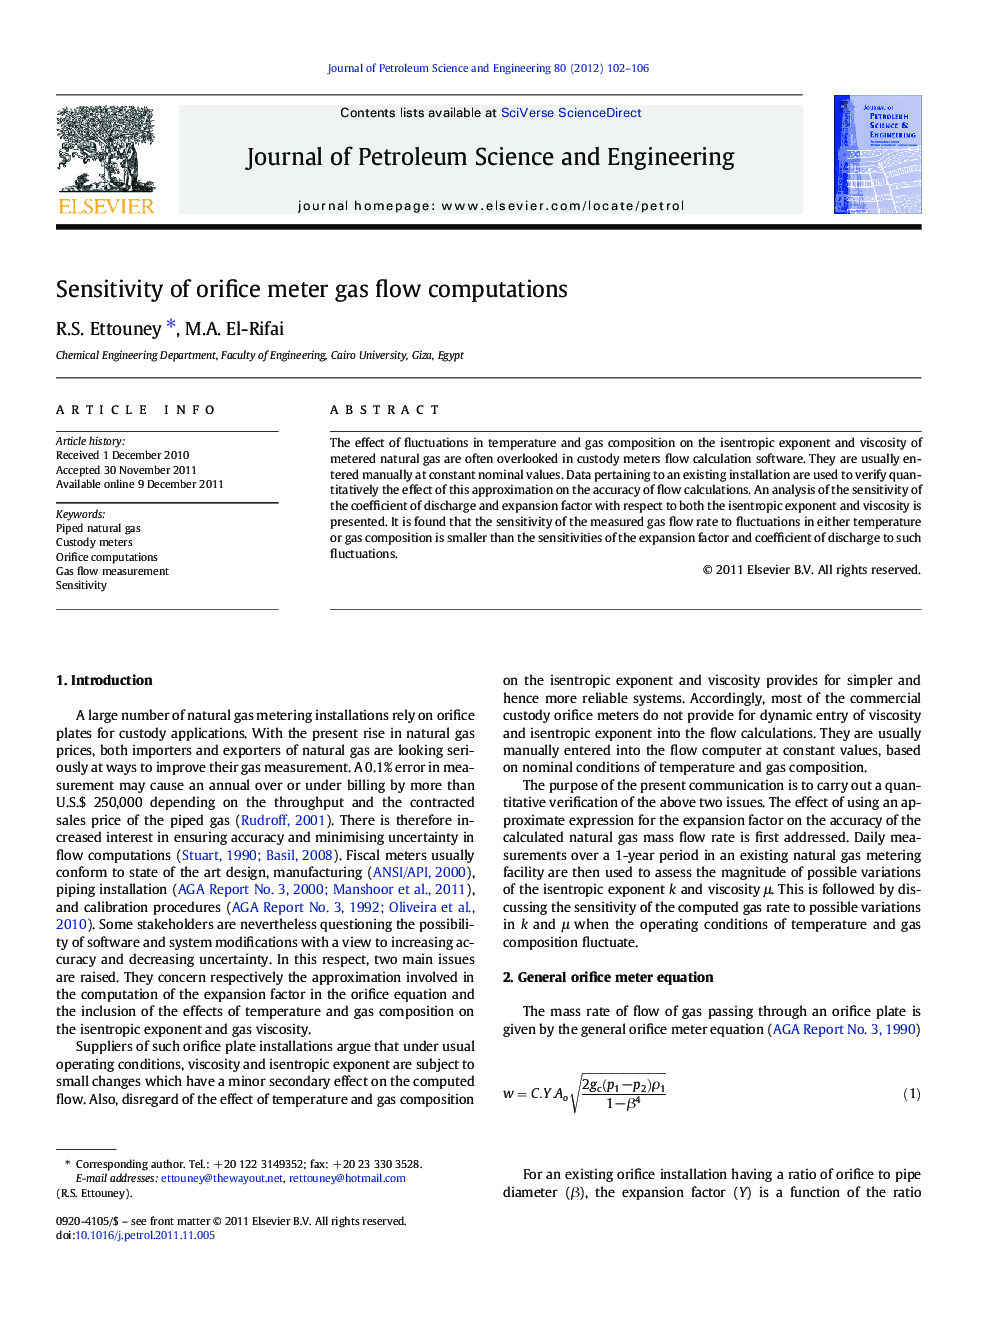 Sensitivity of orifice meter gas flow computations